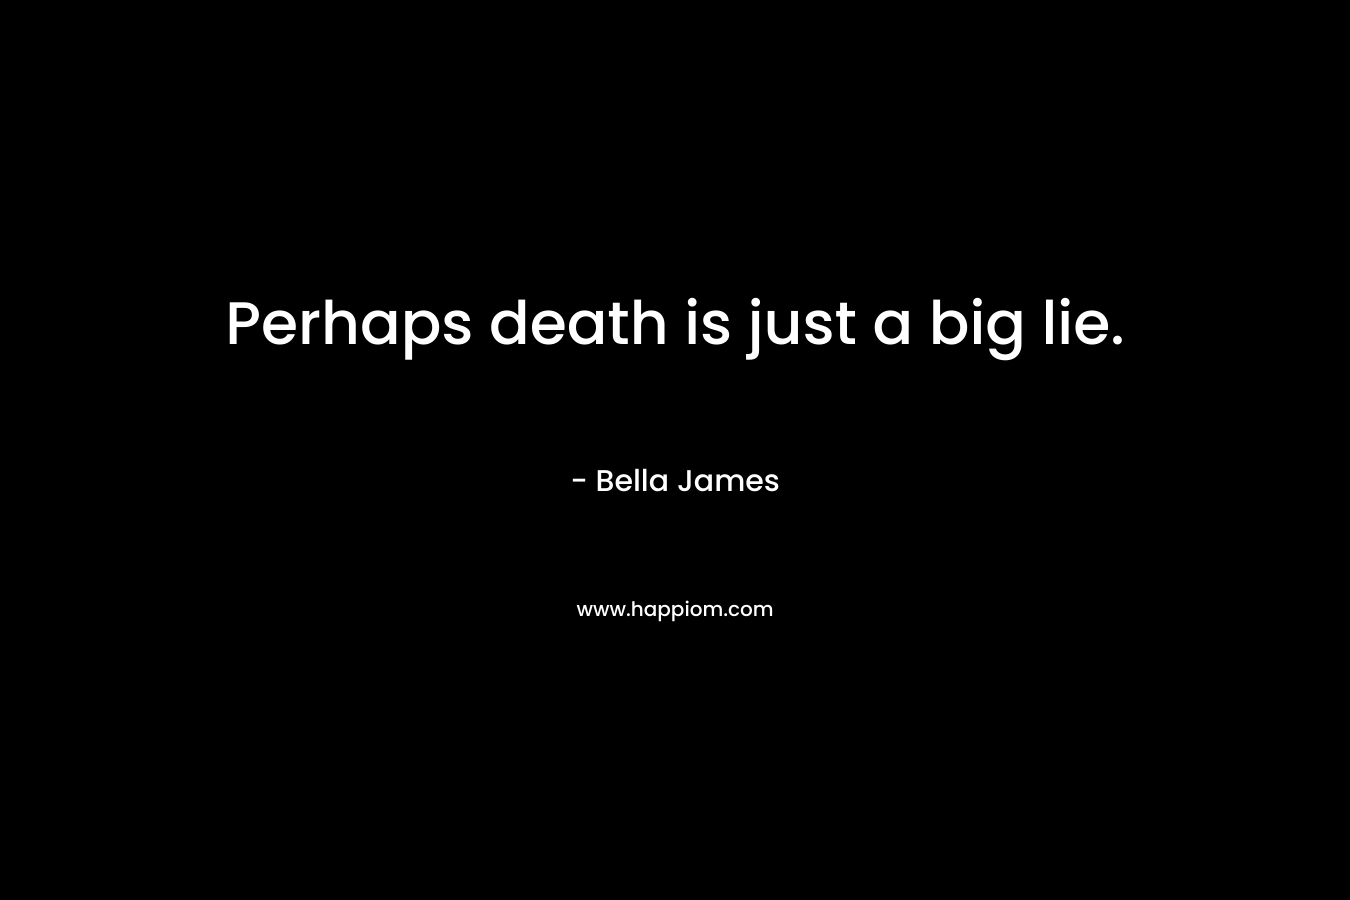 Perhaps death is just a big lie.